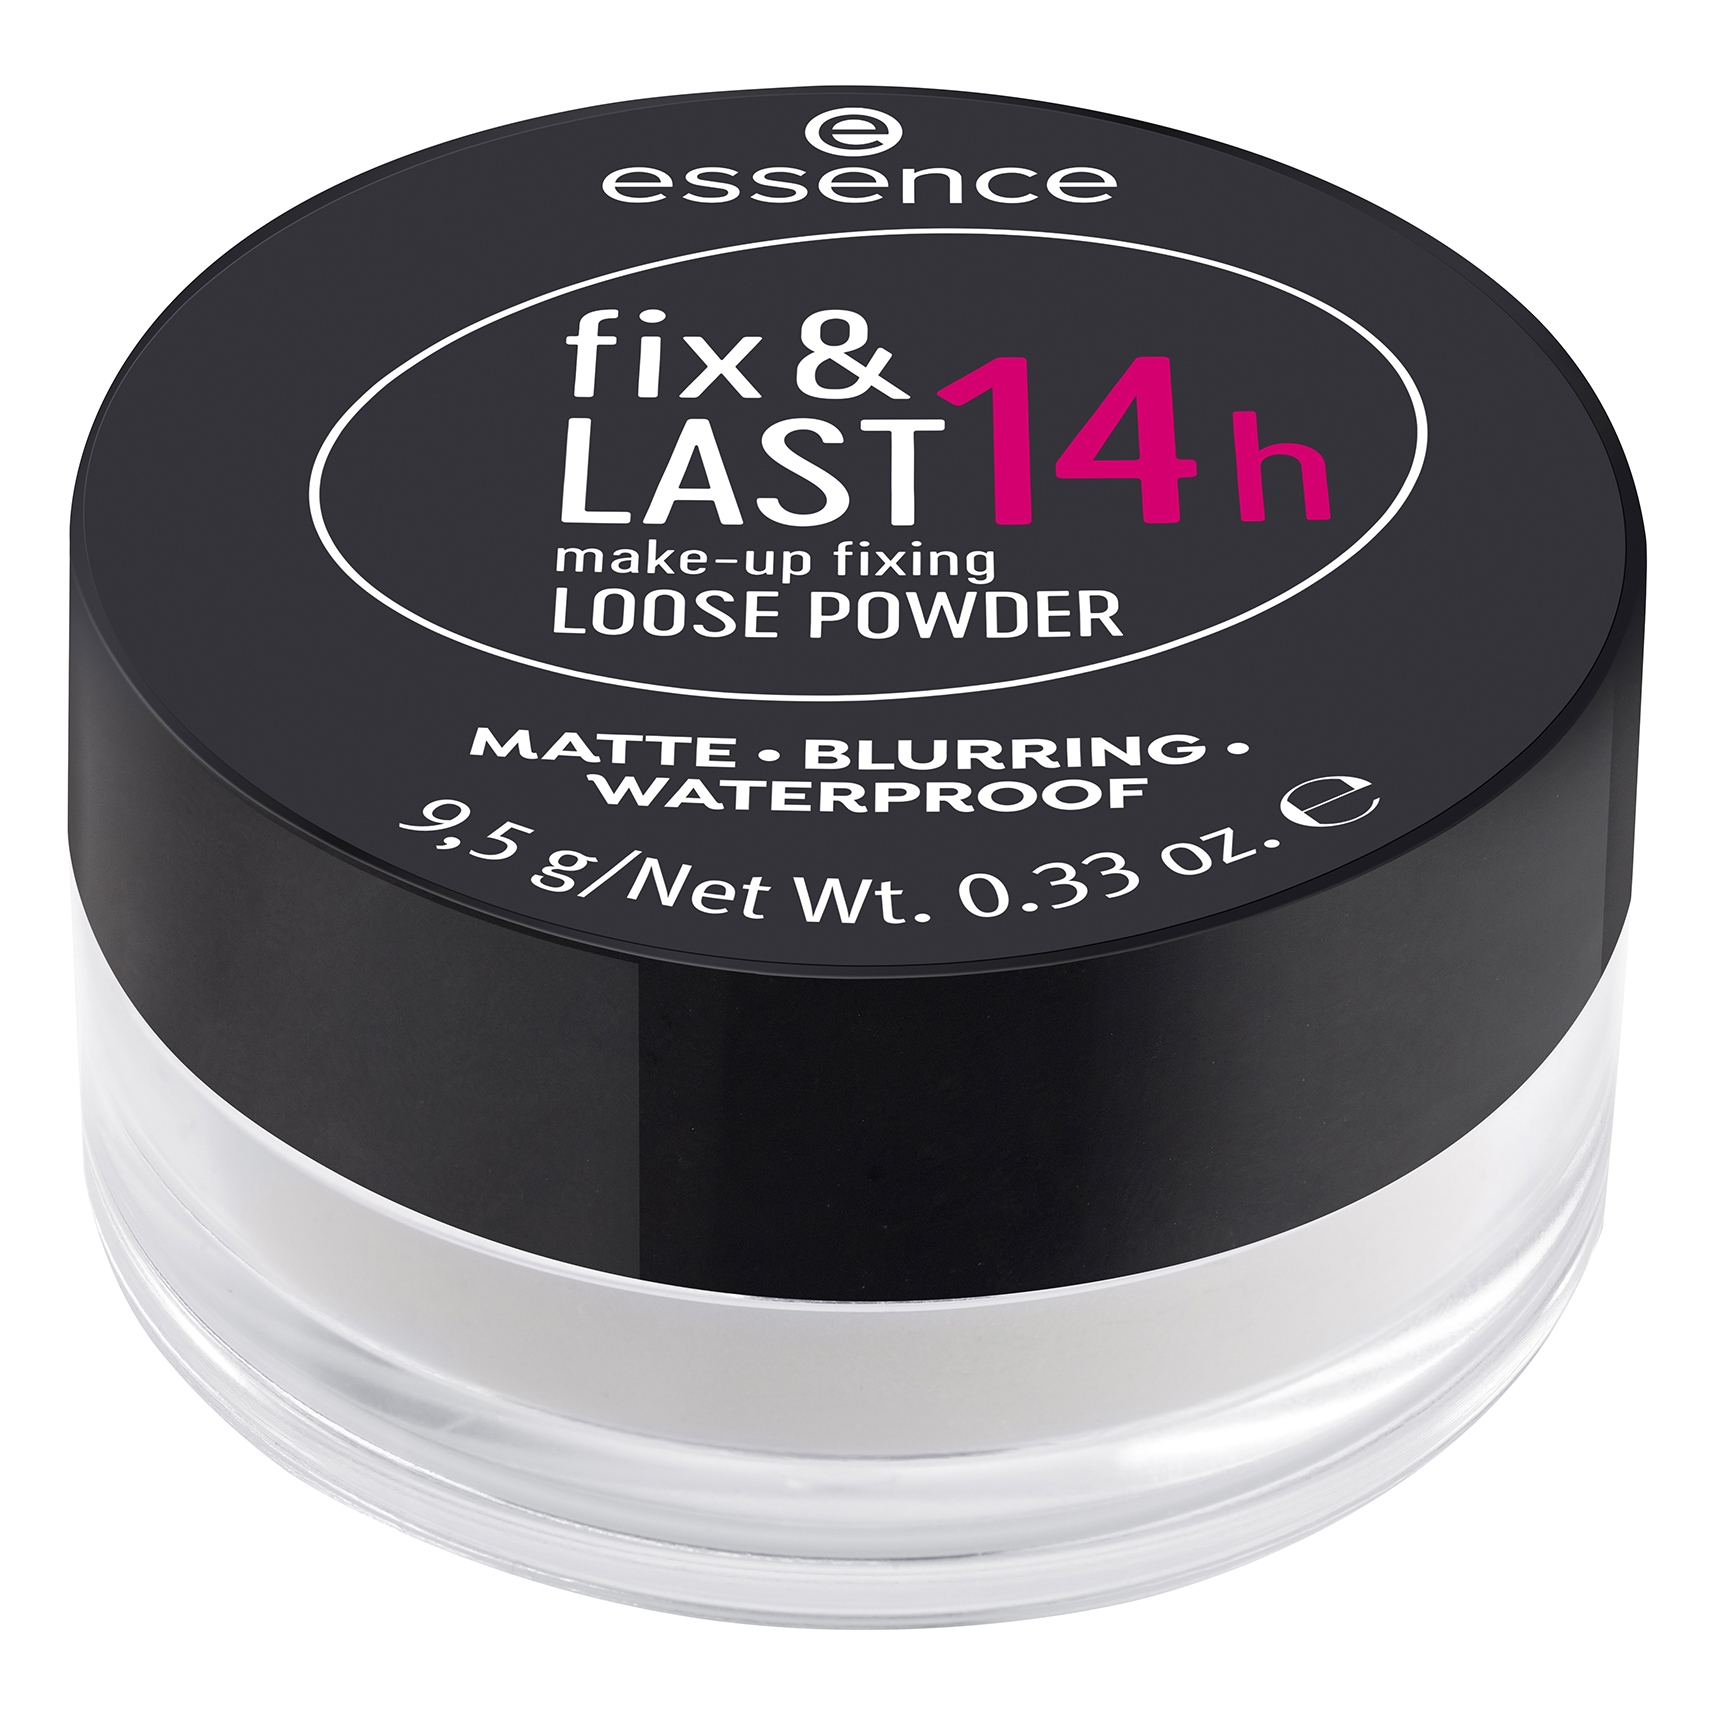 & Puder LOOSE 14h 3 | tlg.) fixing POWDER«, »fix Essence online UNIVERSAL LAST make-up (Set, bestellen